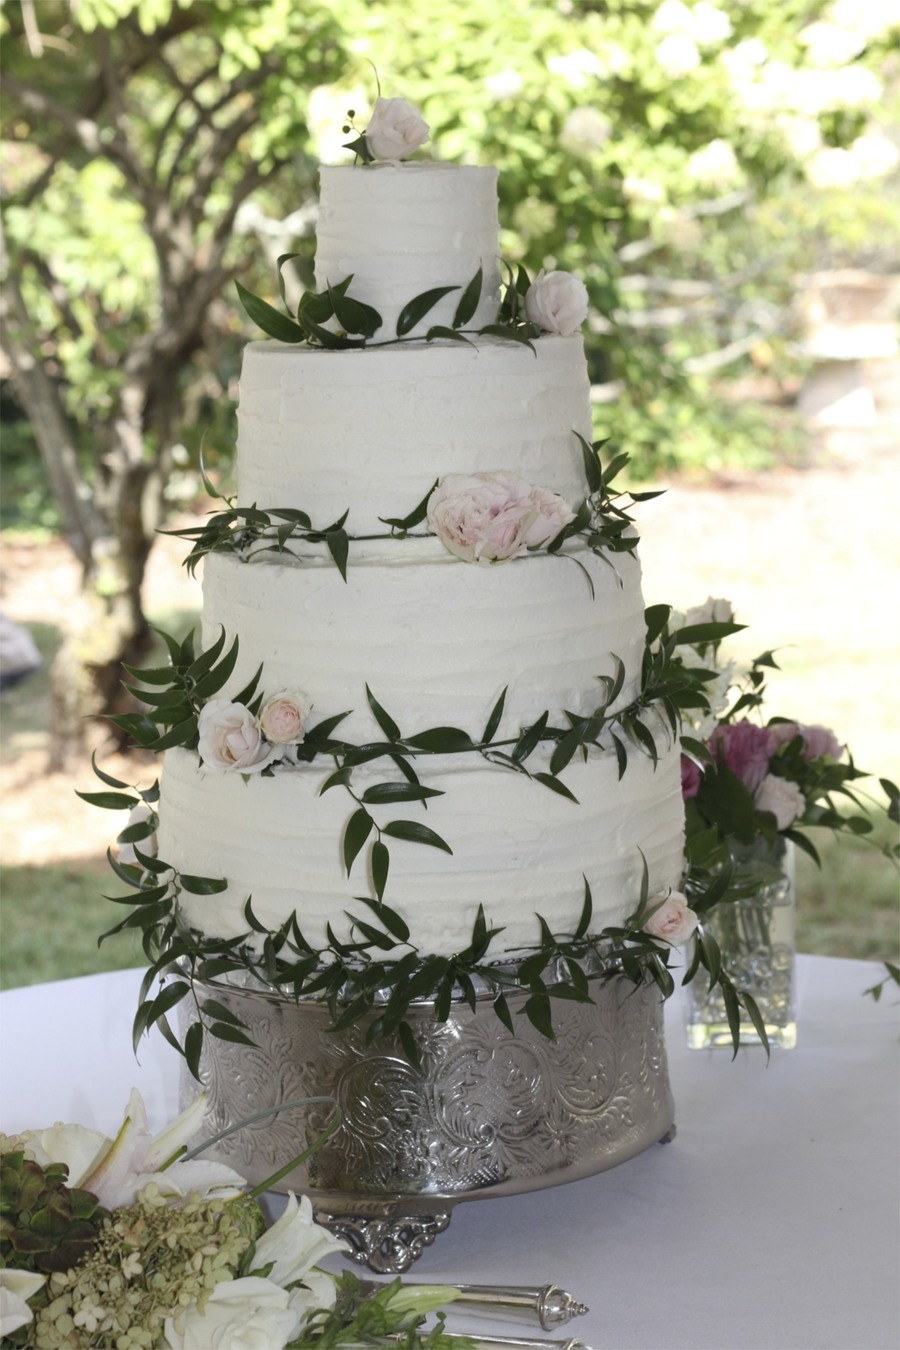 900_731187xc4k_simply-rustic-wedding-cake-with-fresh-flowers.jpg